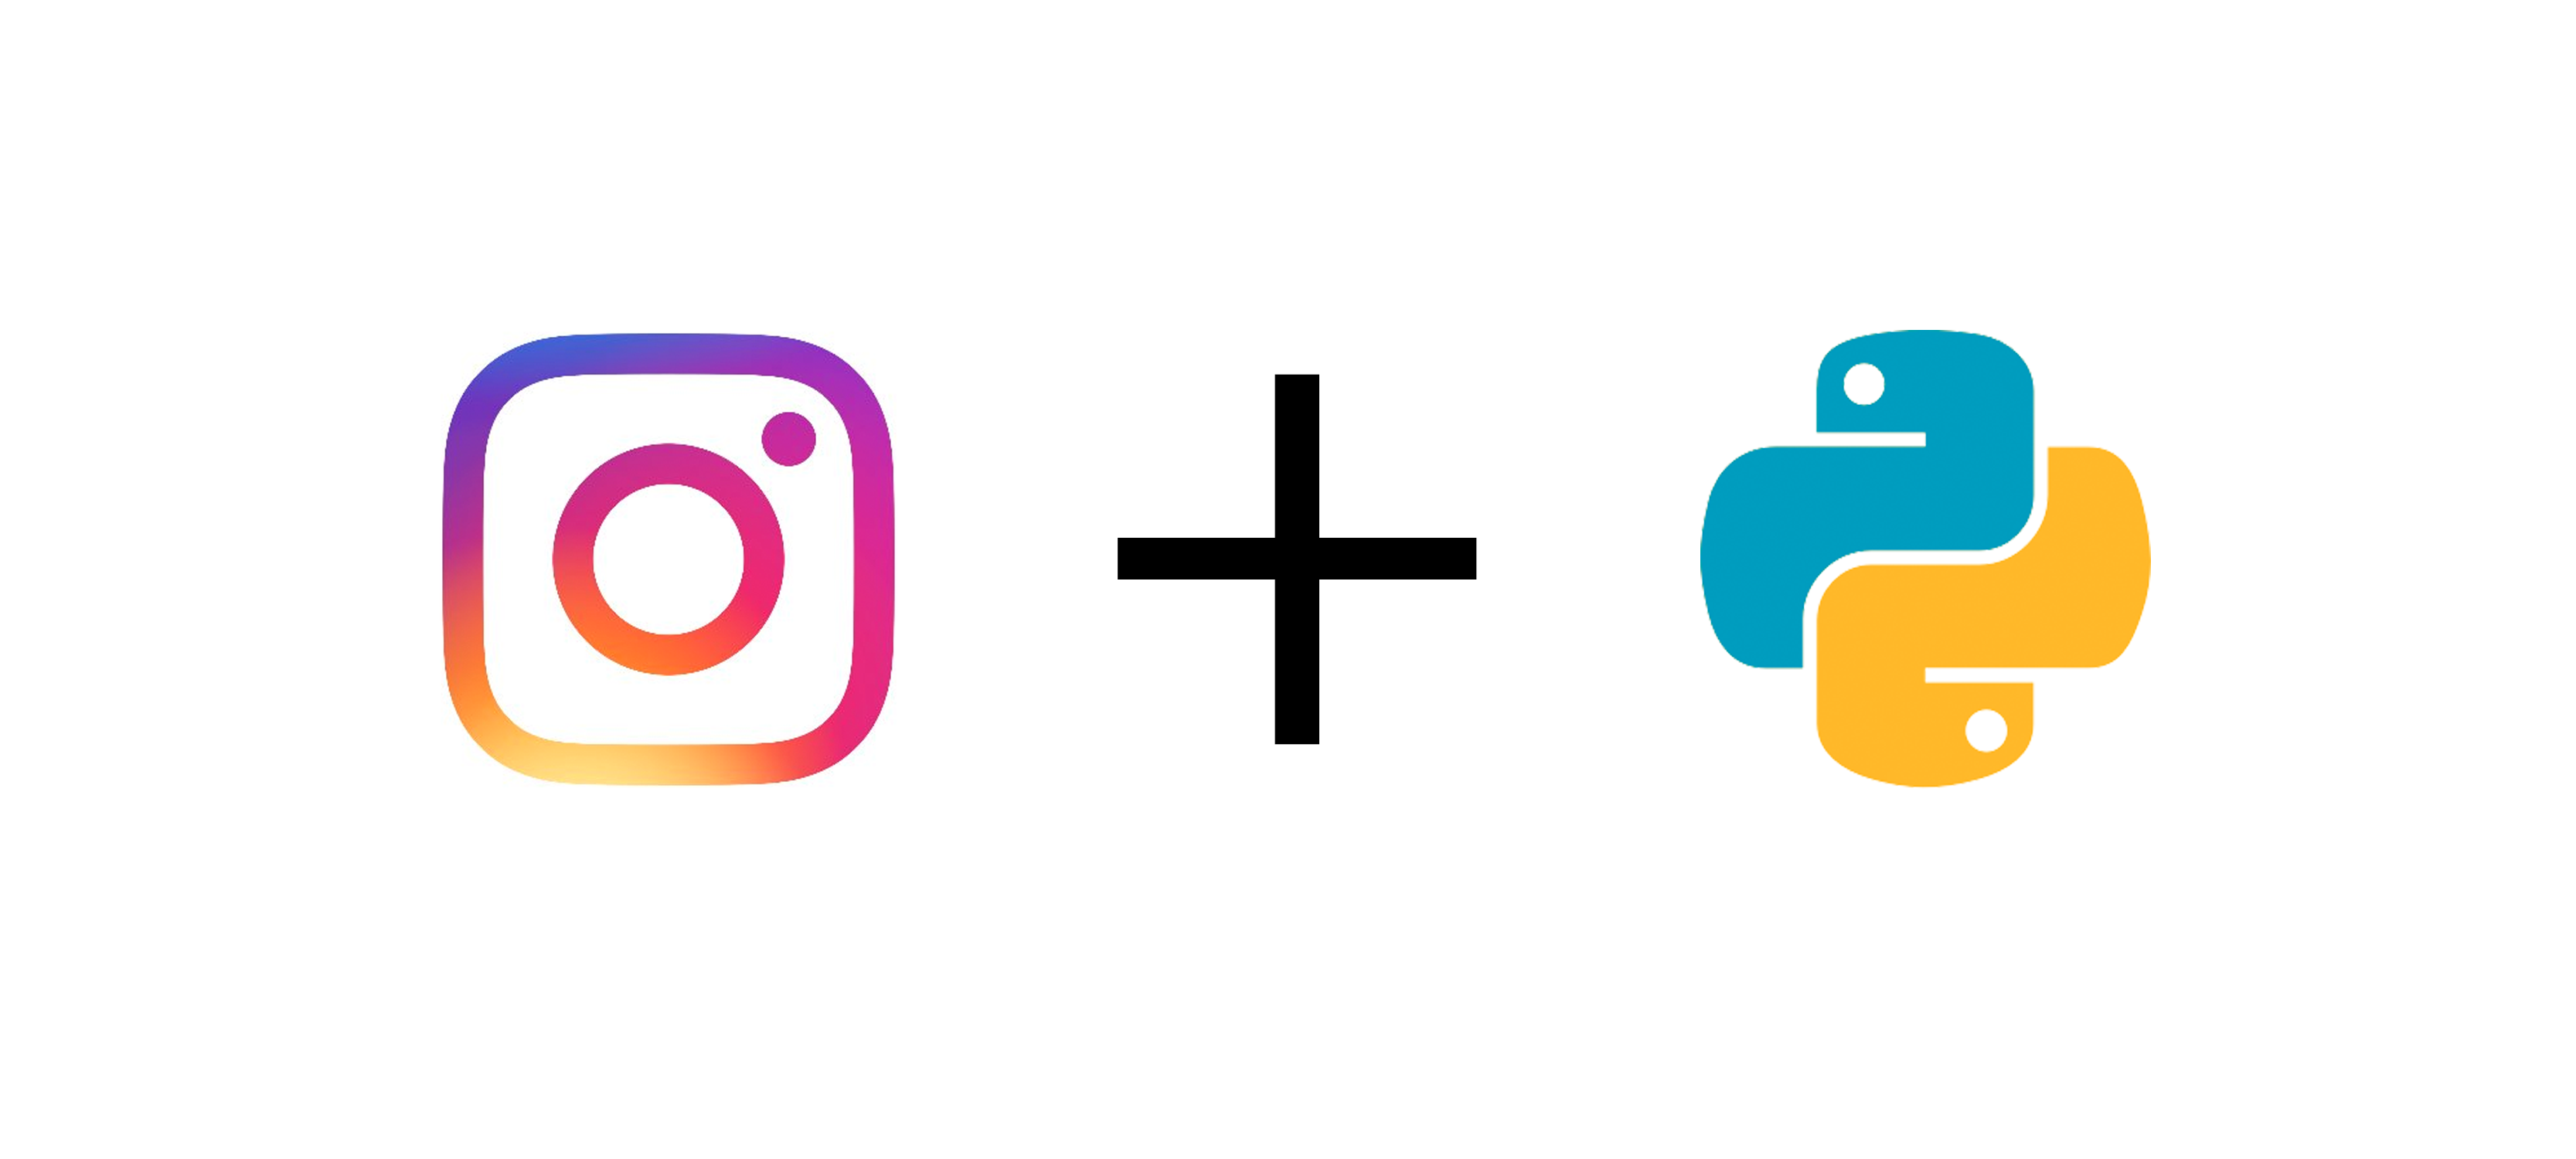 Instagram and Python logos